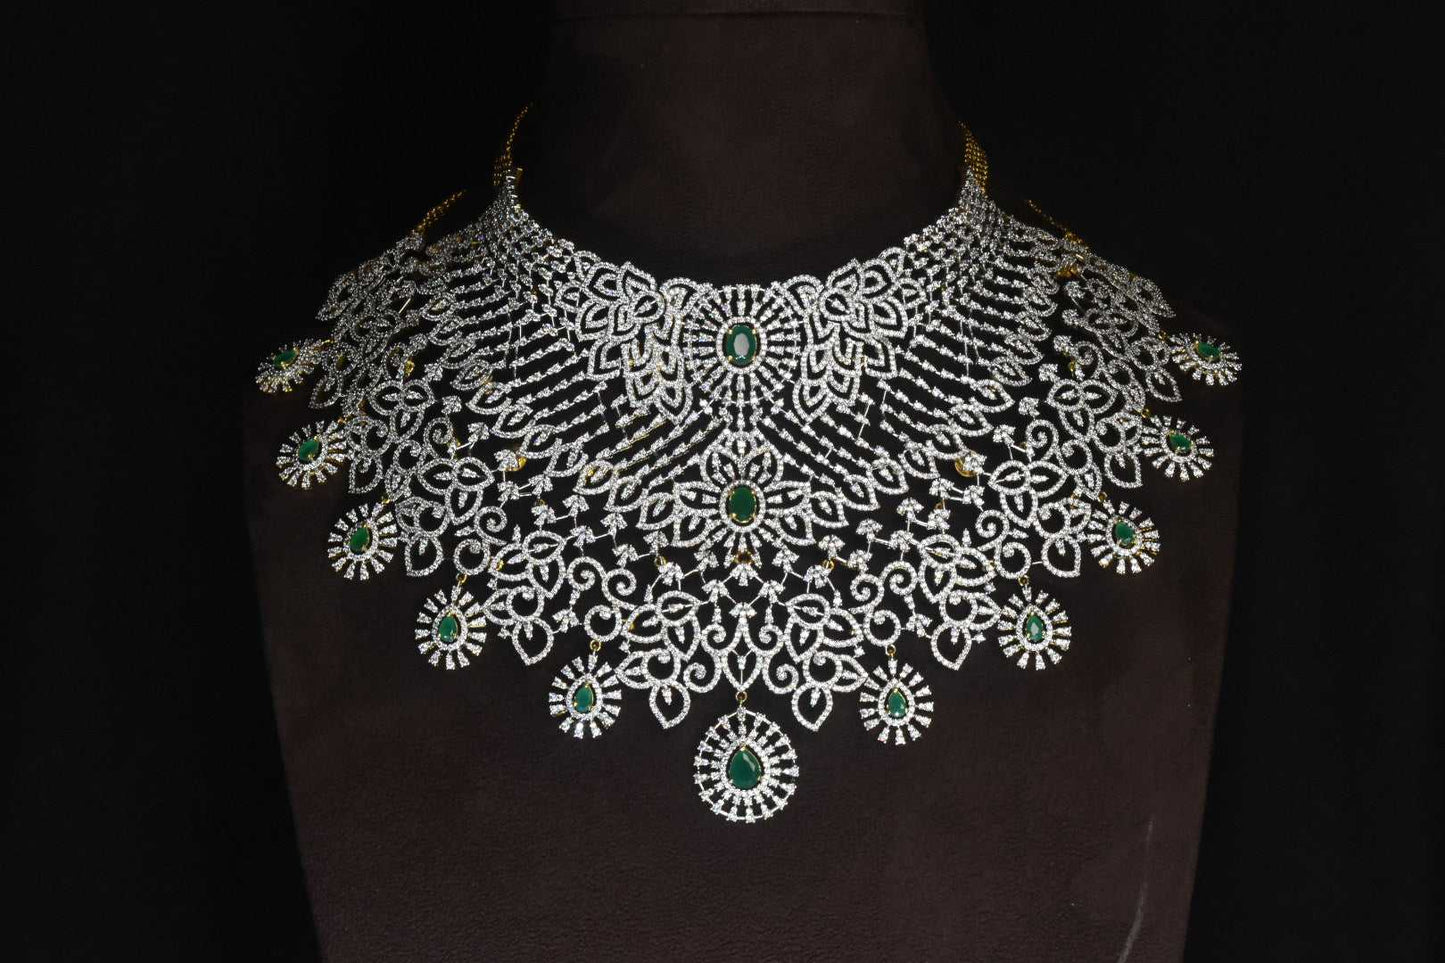 Grand Bridal Detachable Choker in American Diamonds By Asp Fashion Jewellery 